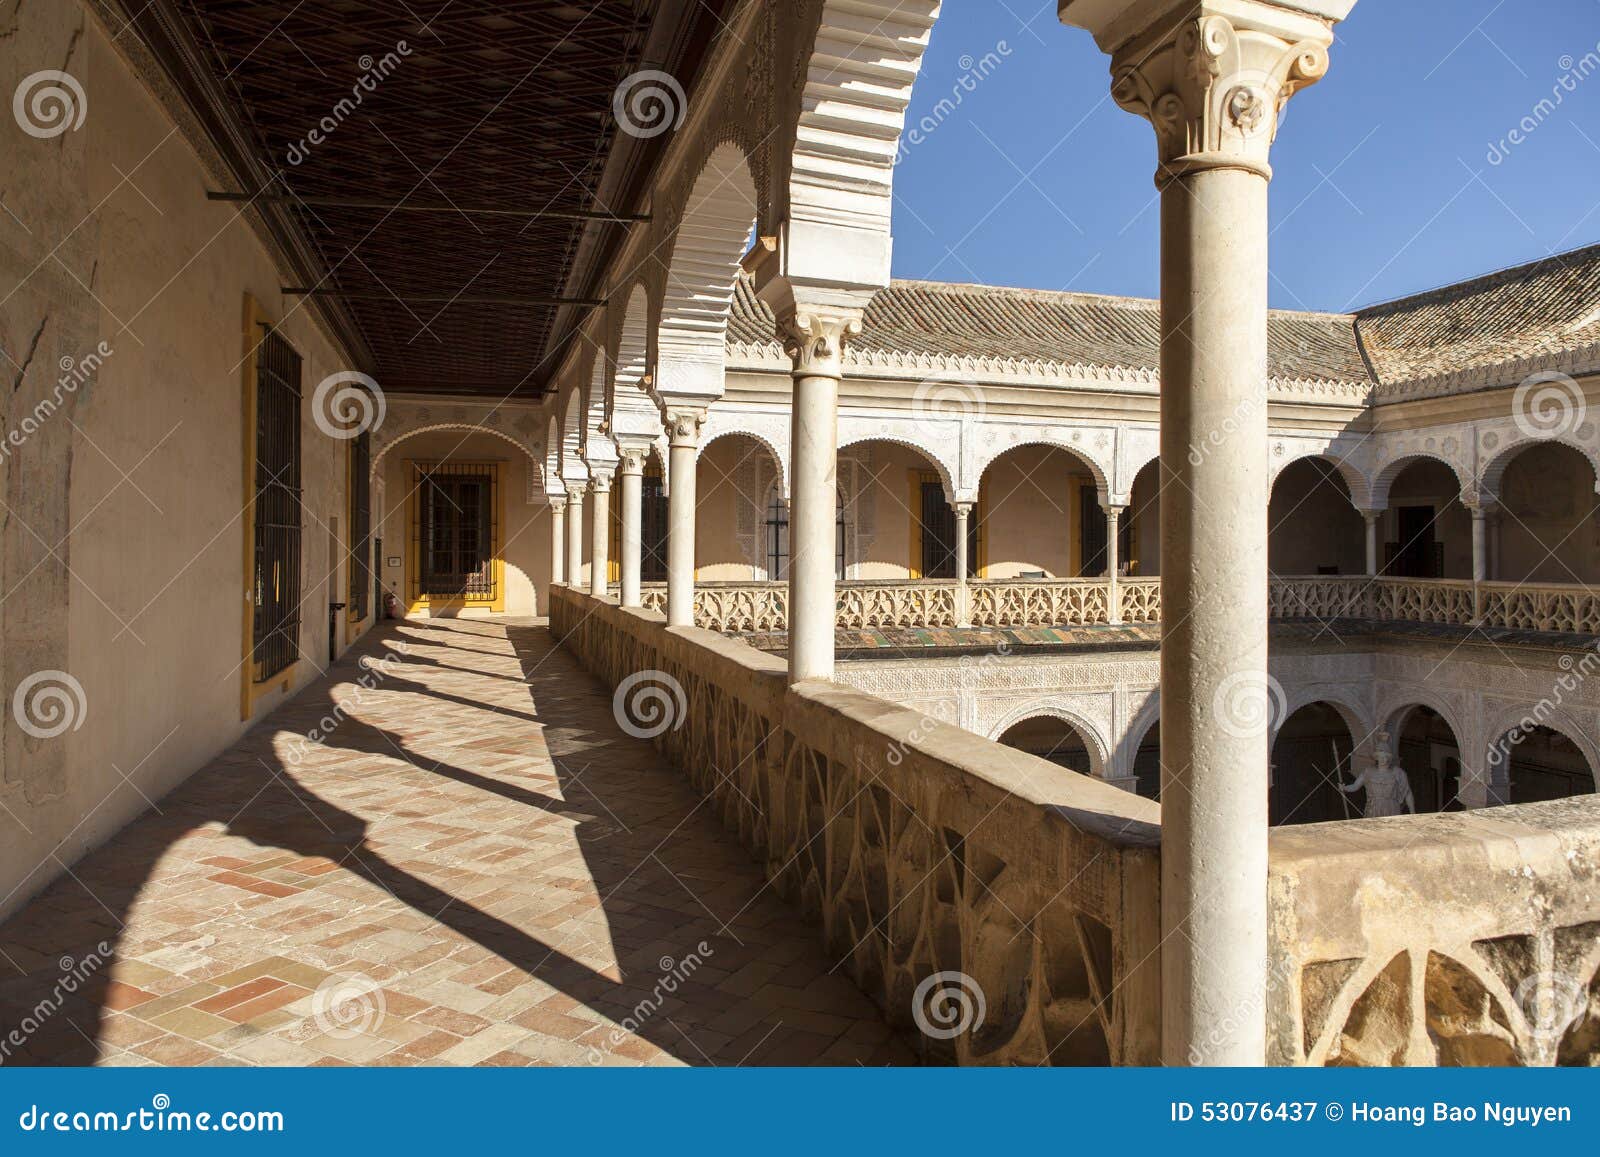 casa de pilatos palace in seville, spain